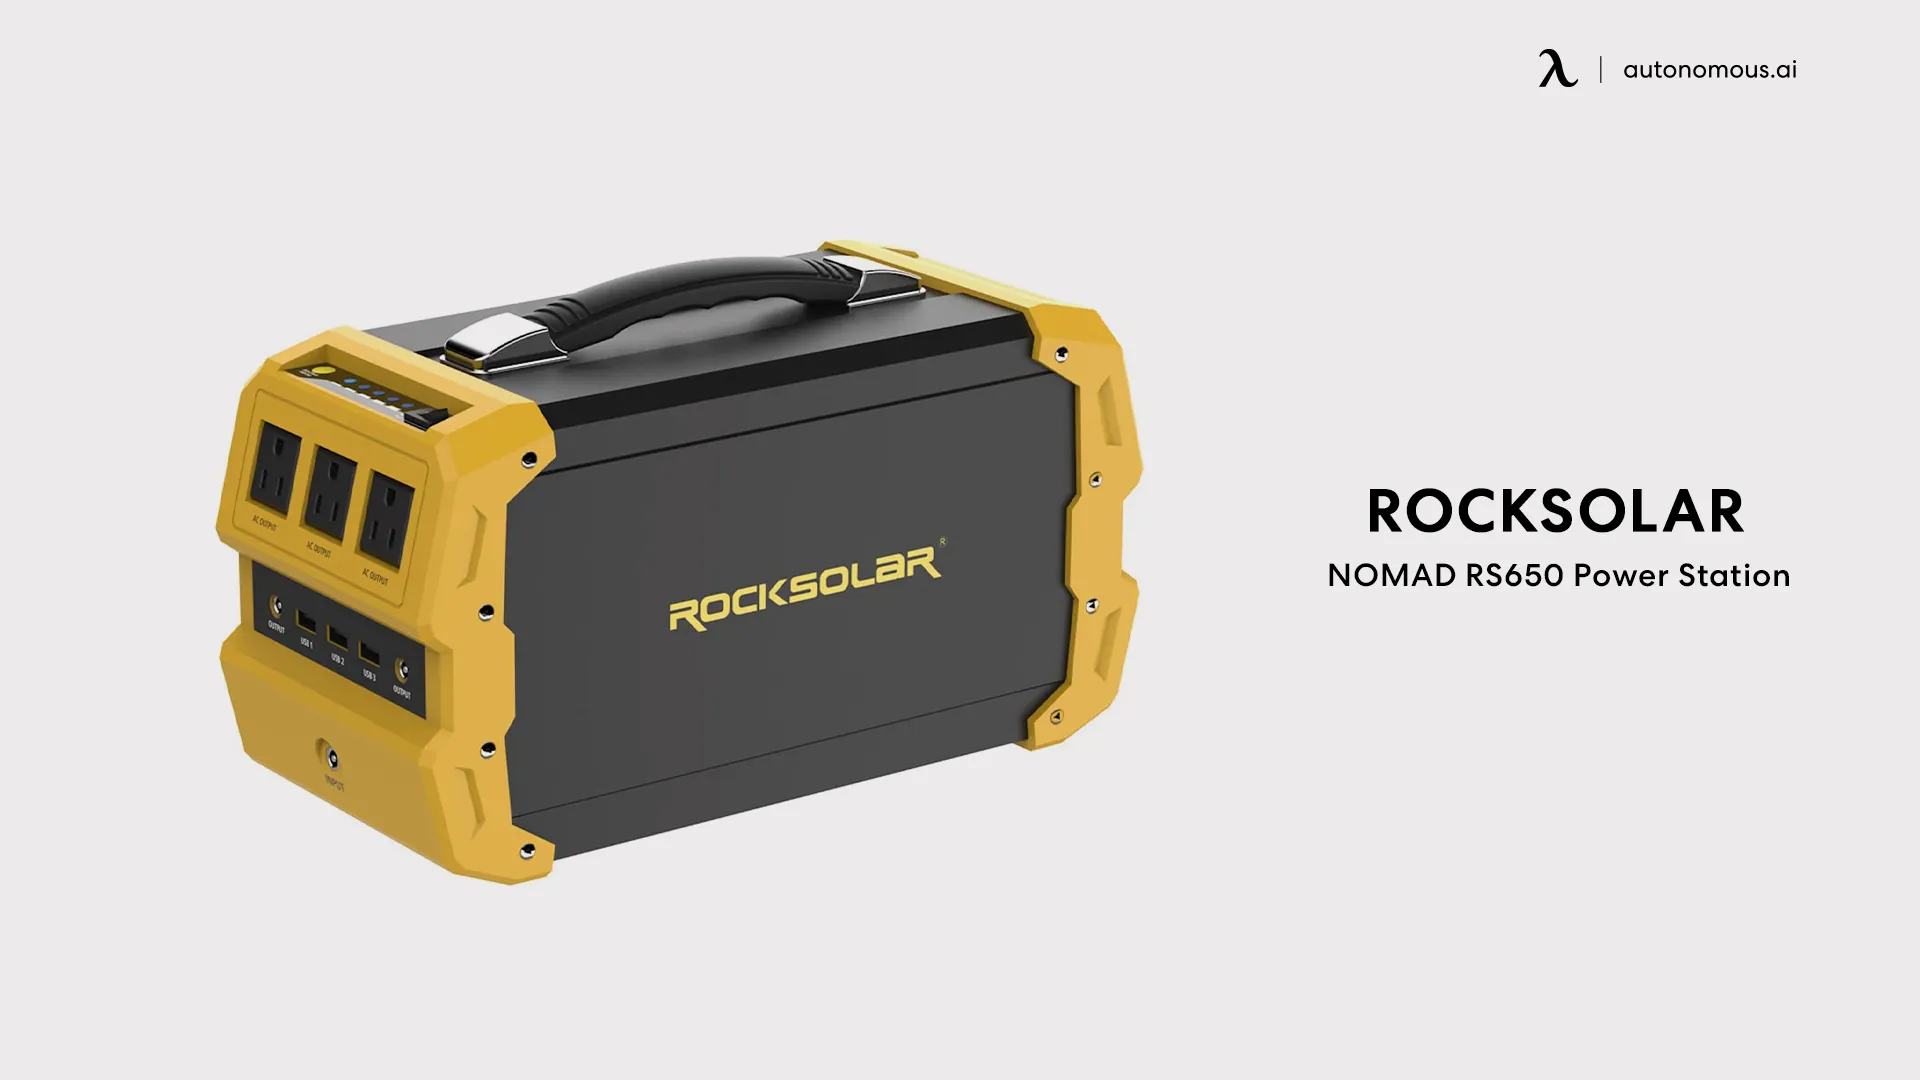 RockSolar NOMAD RS650 portable power station